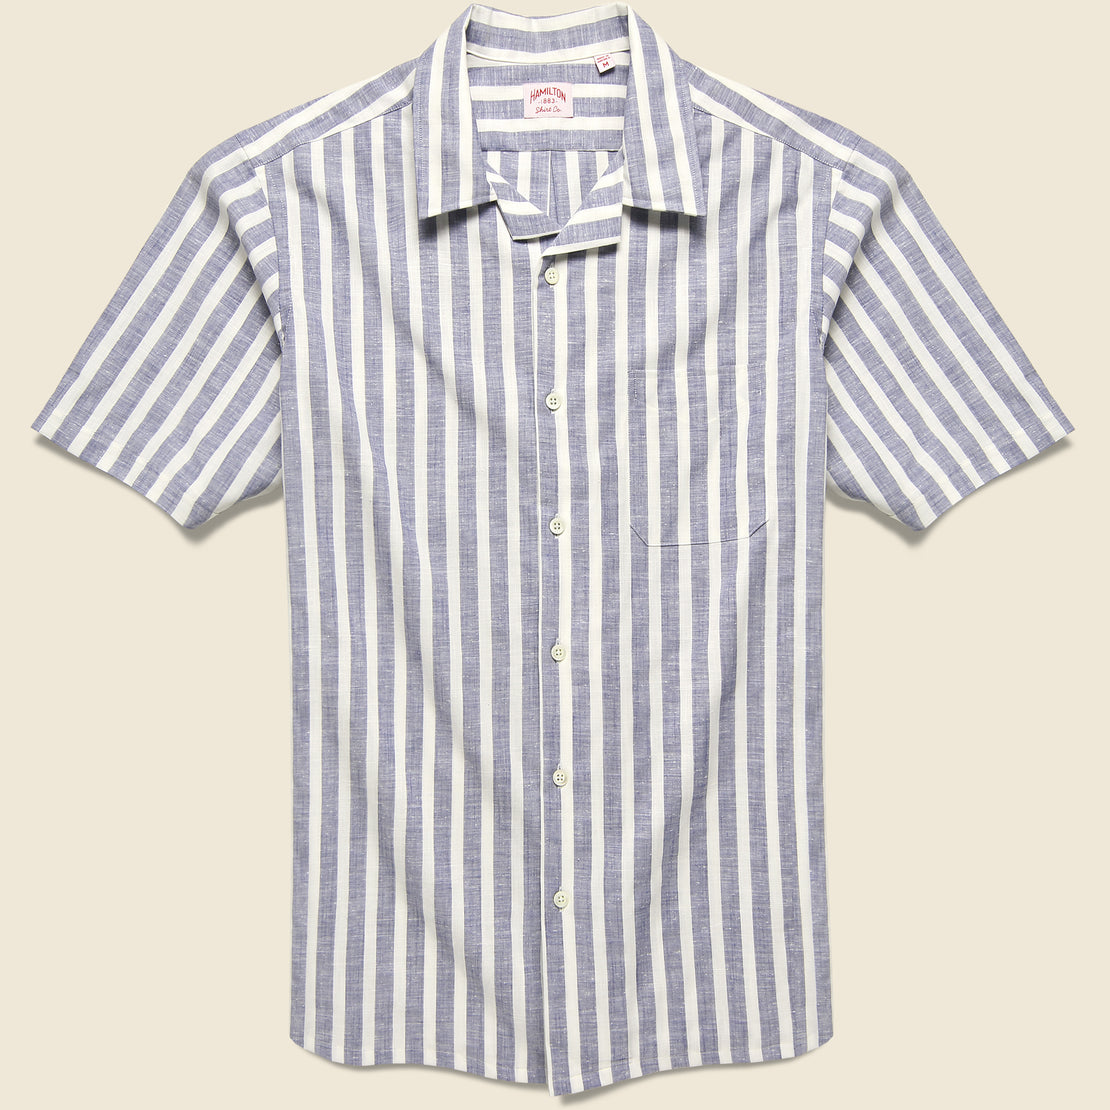 Hamilton Shirt Co. Stripe Chambray Camp Shirt - Blue/White